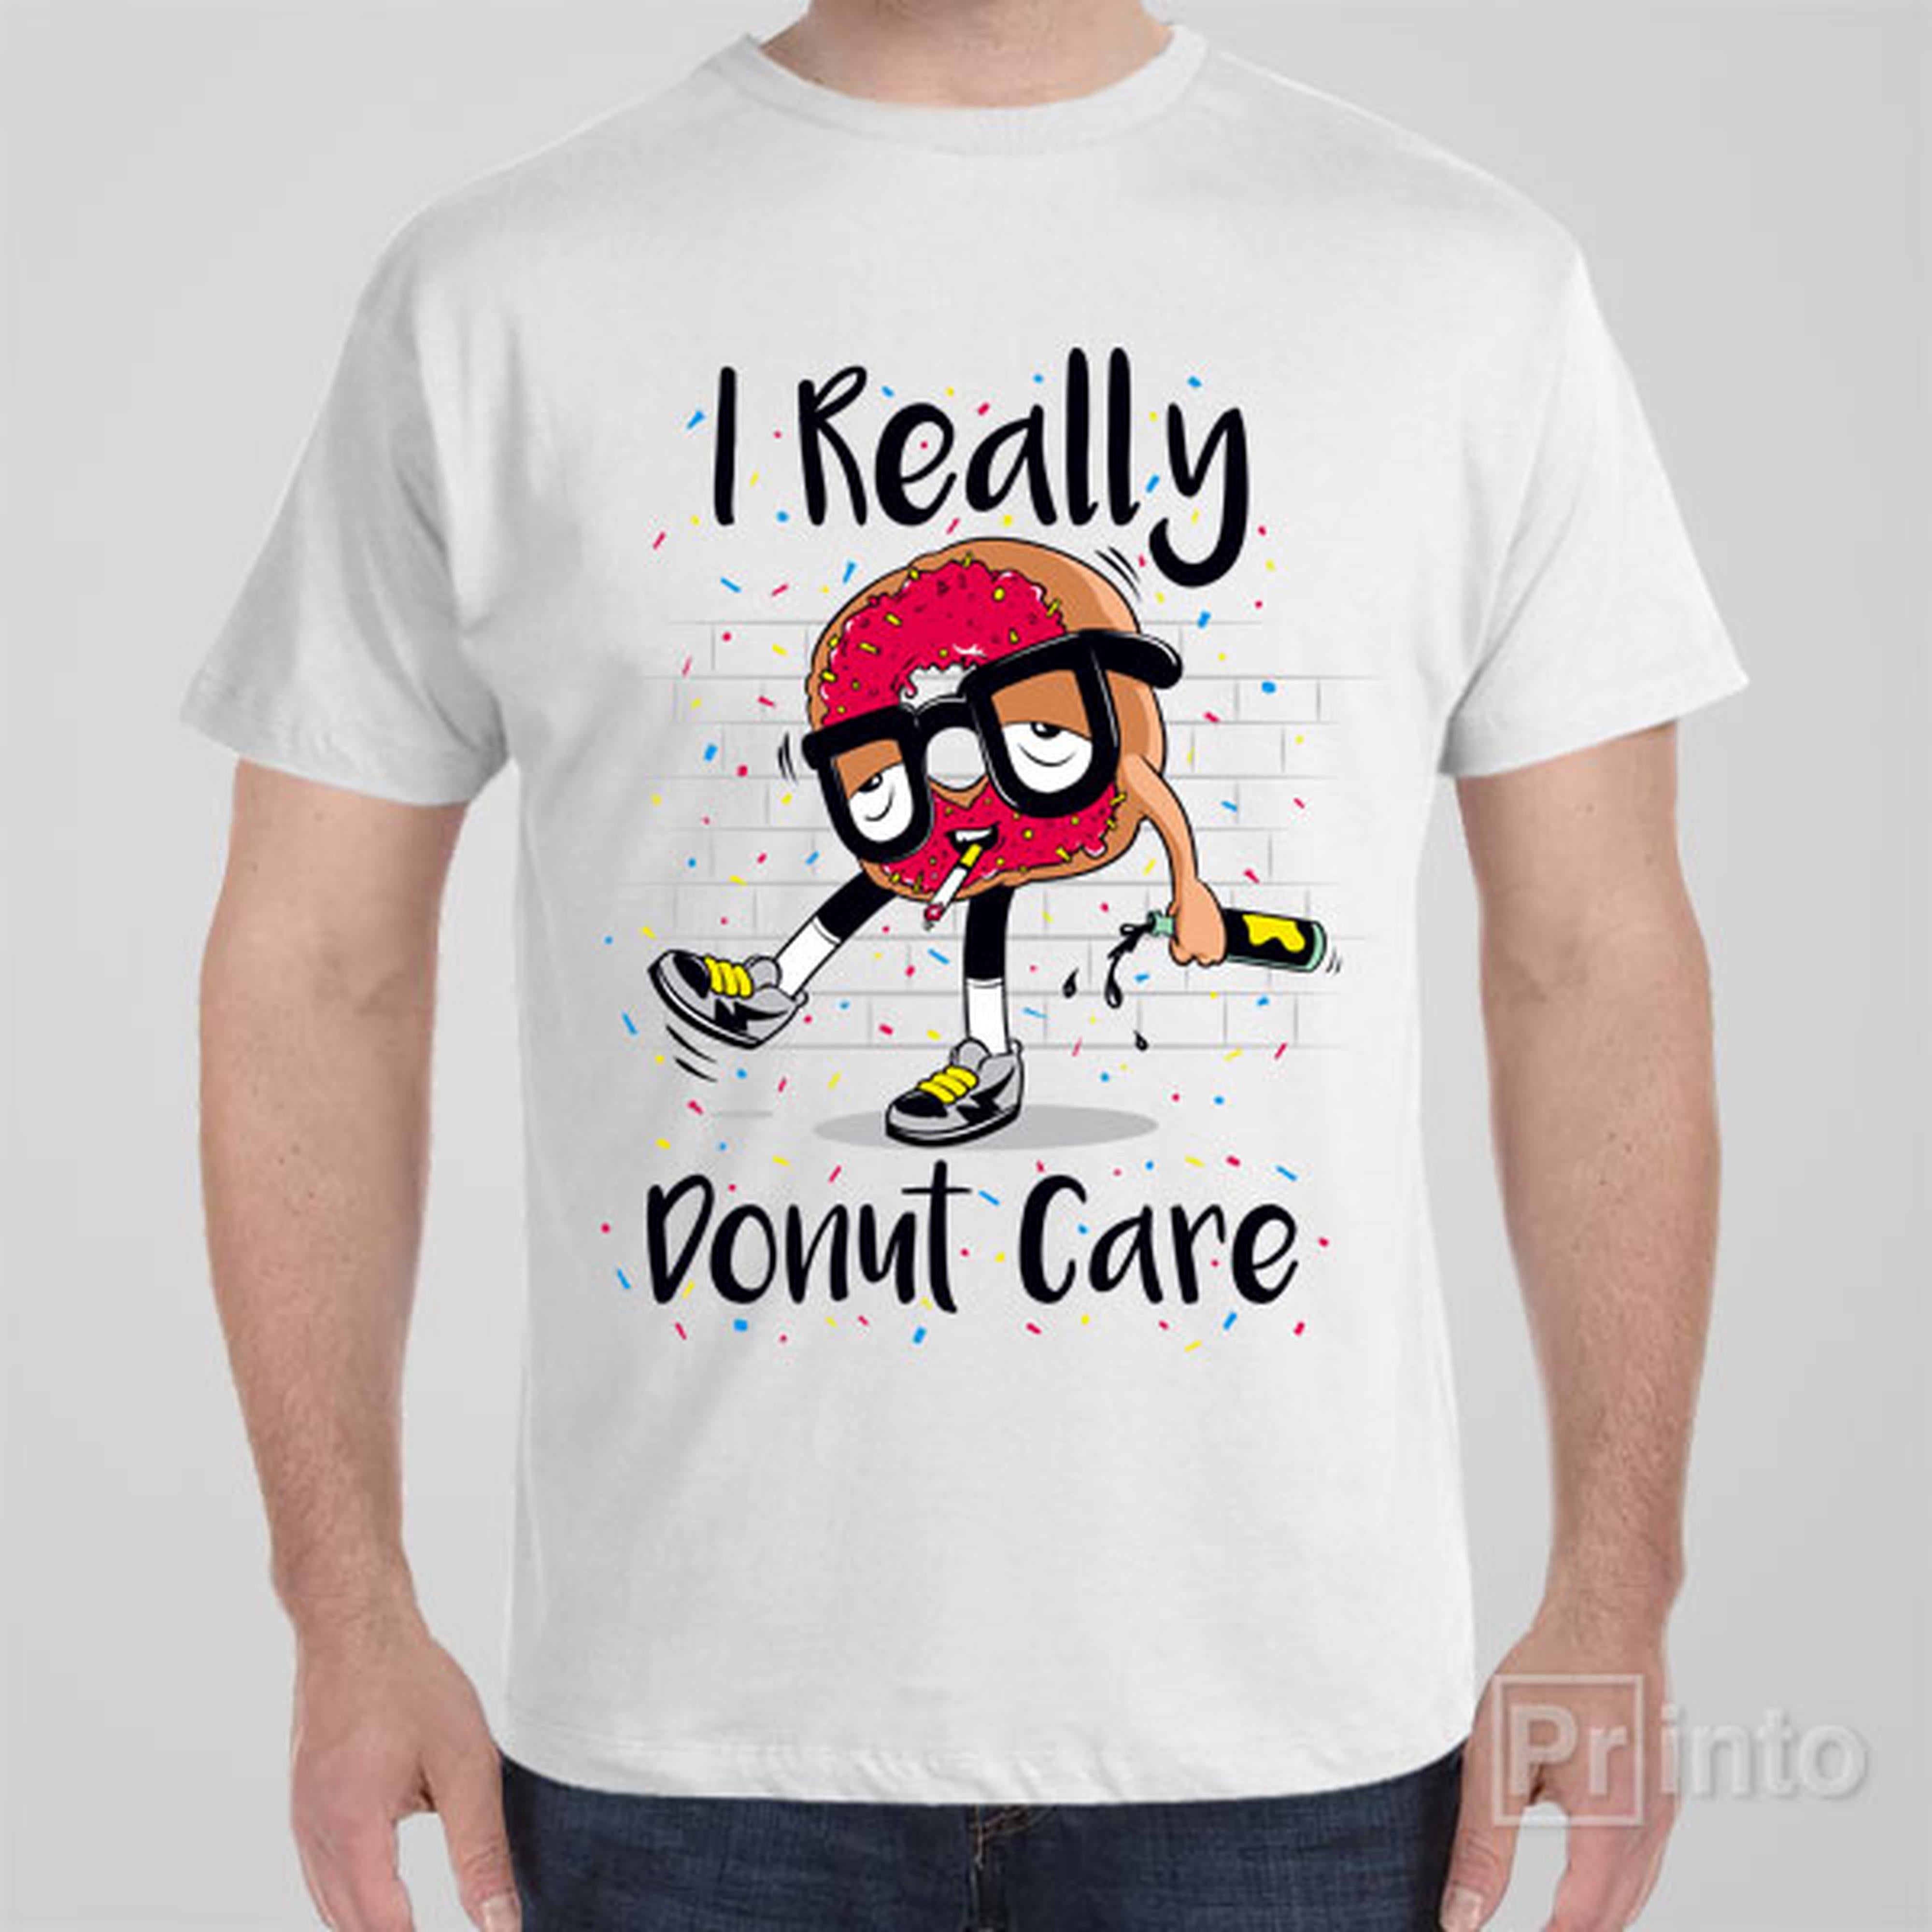 i-donut-care-t-shirt